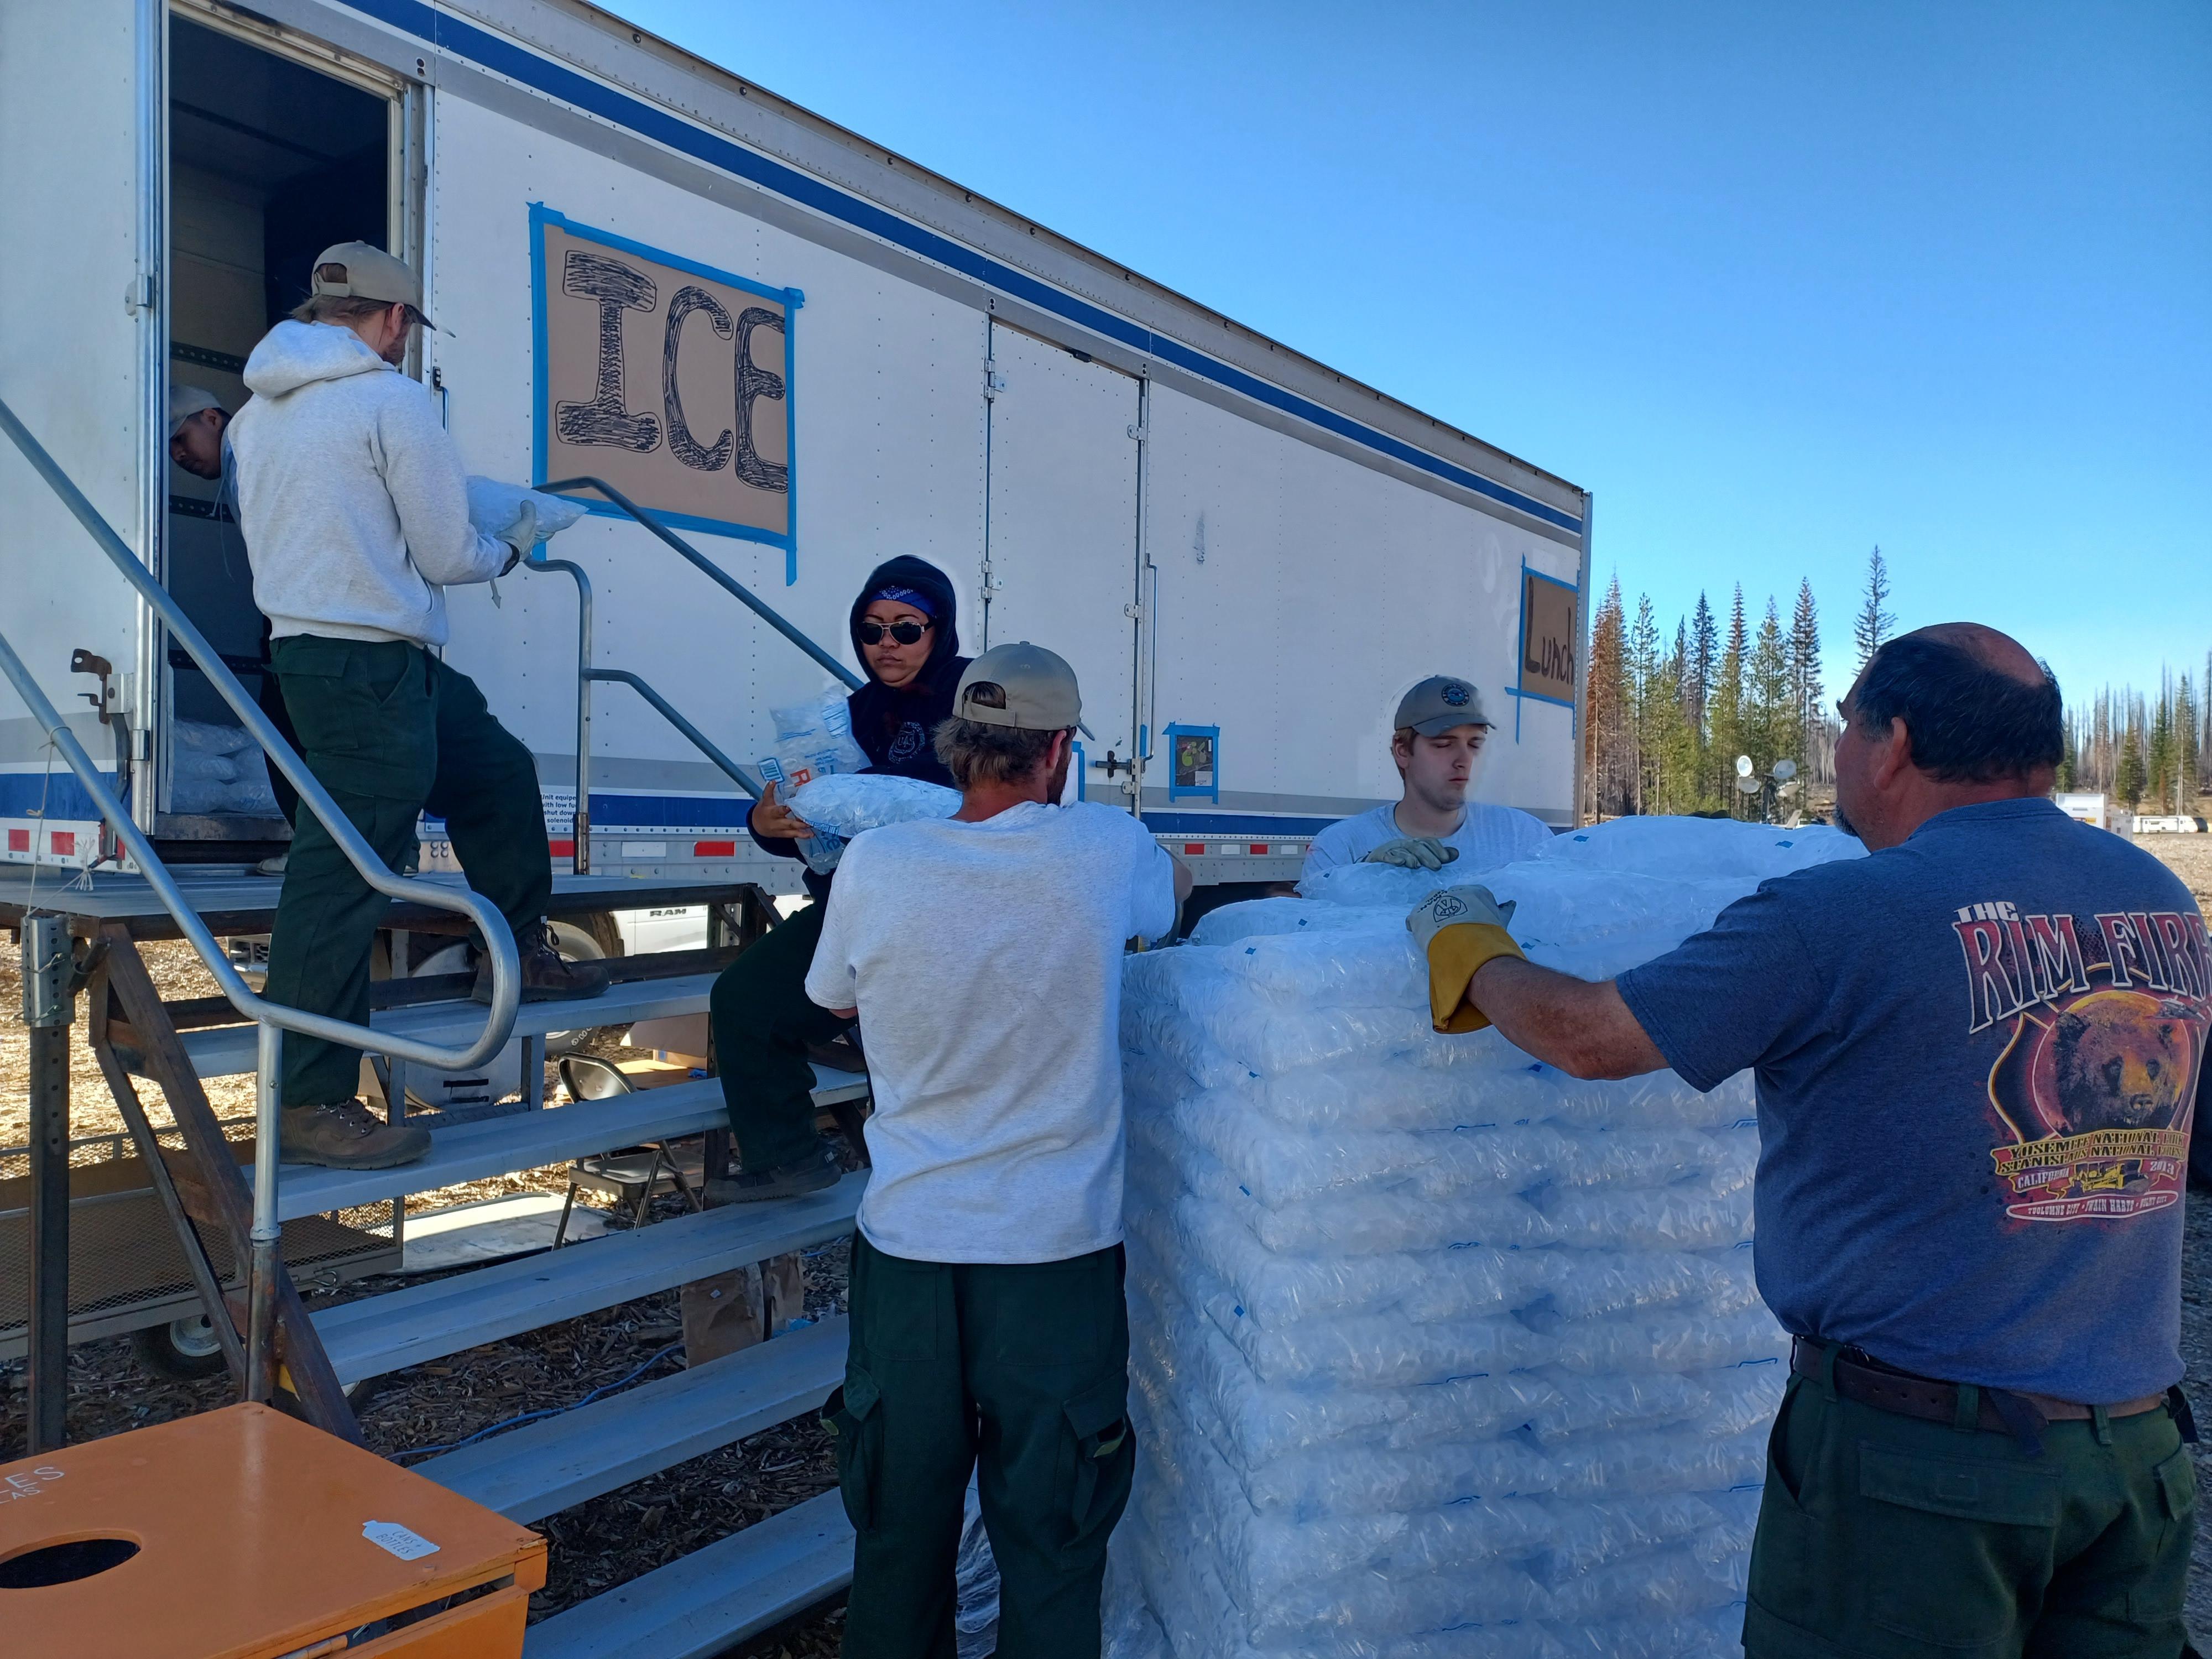 Angell Job Corps camp crew loading ice